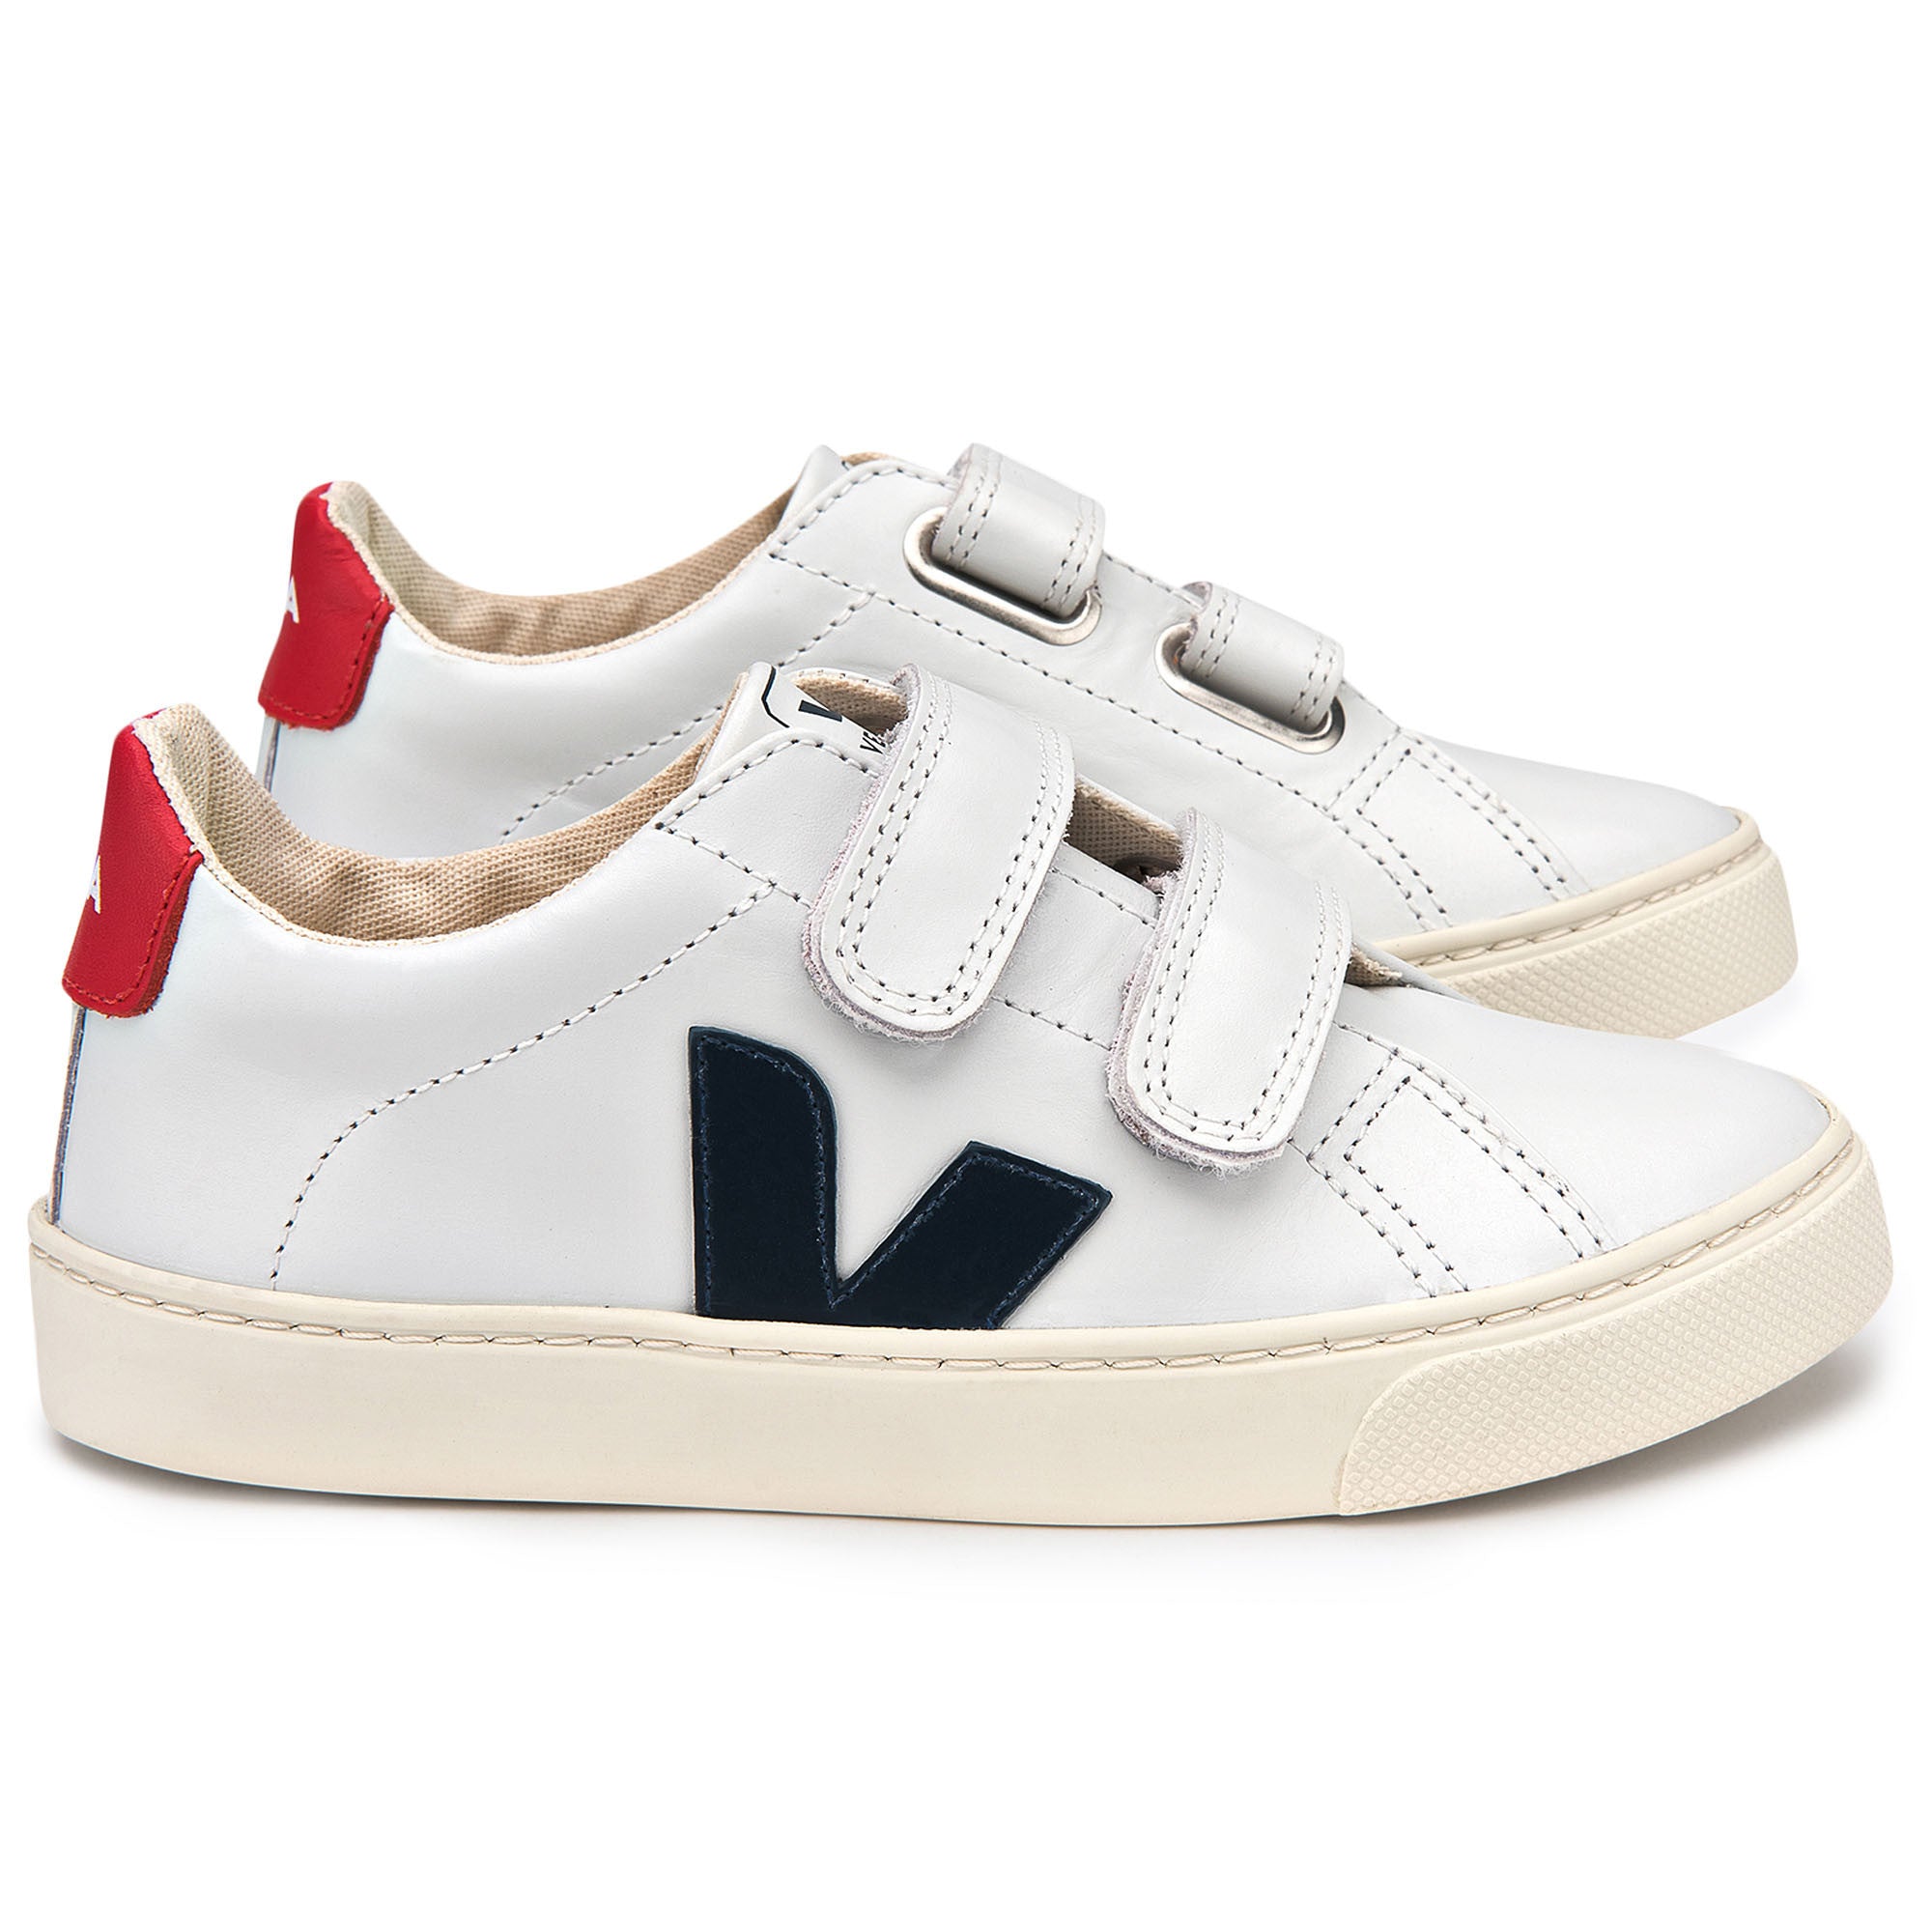 Boys&Girls White Leather Velcro Shoes - CÉMAROSE | Children's Fashion Store - 3